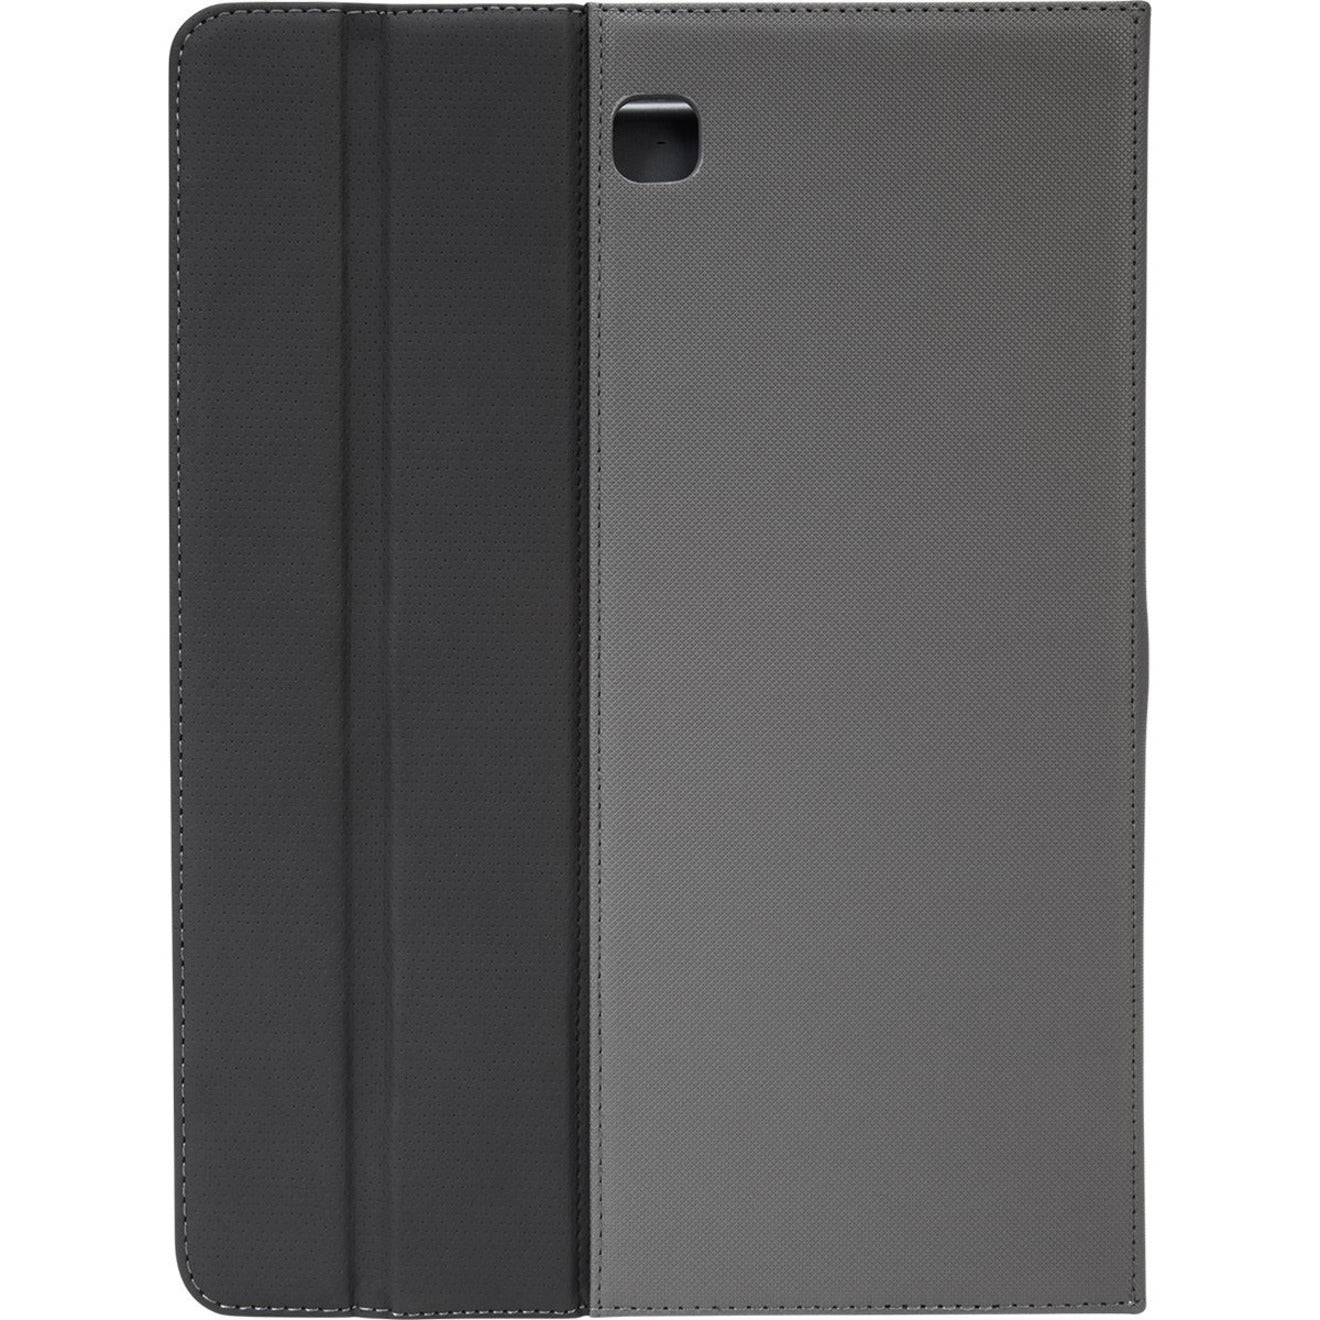 Targus Fit N' Grip THZ59203US Carrying Case for 10" Apple iPad 2 iPad (3rd Generation) iPad (4th Generation) iPad Air - Gray